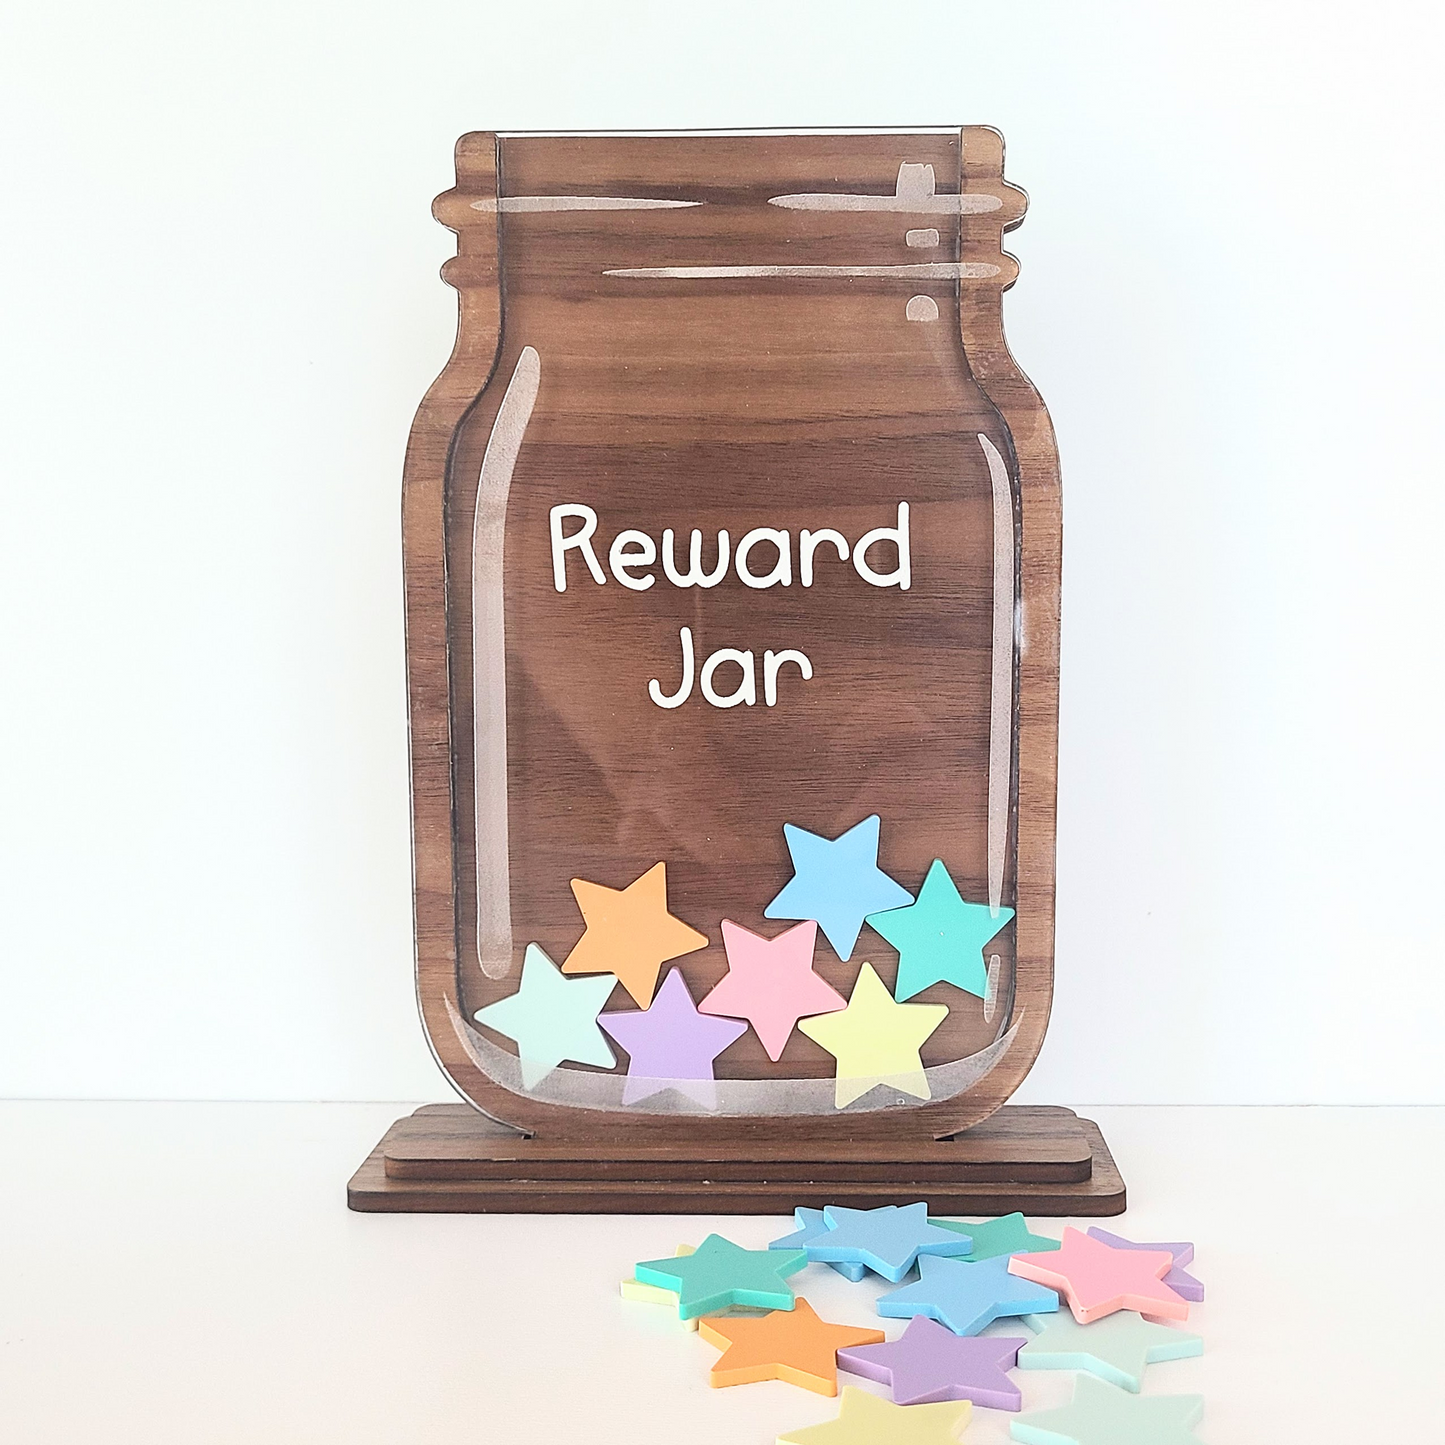 Reward Jar With Stand